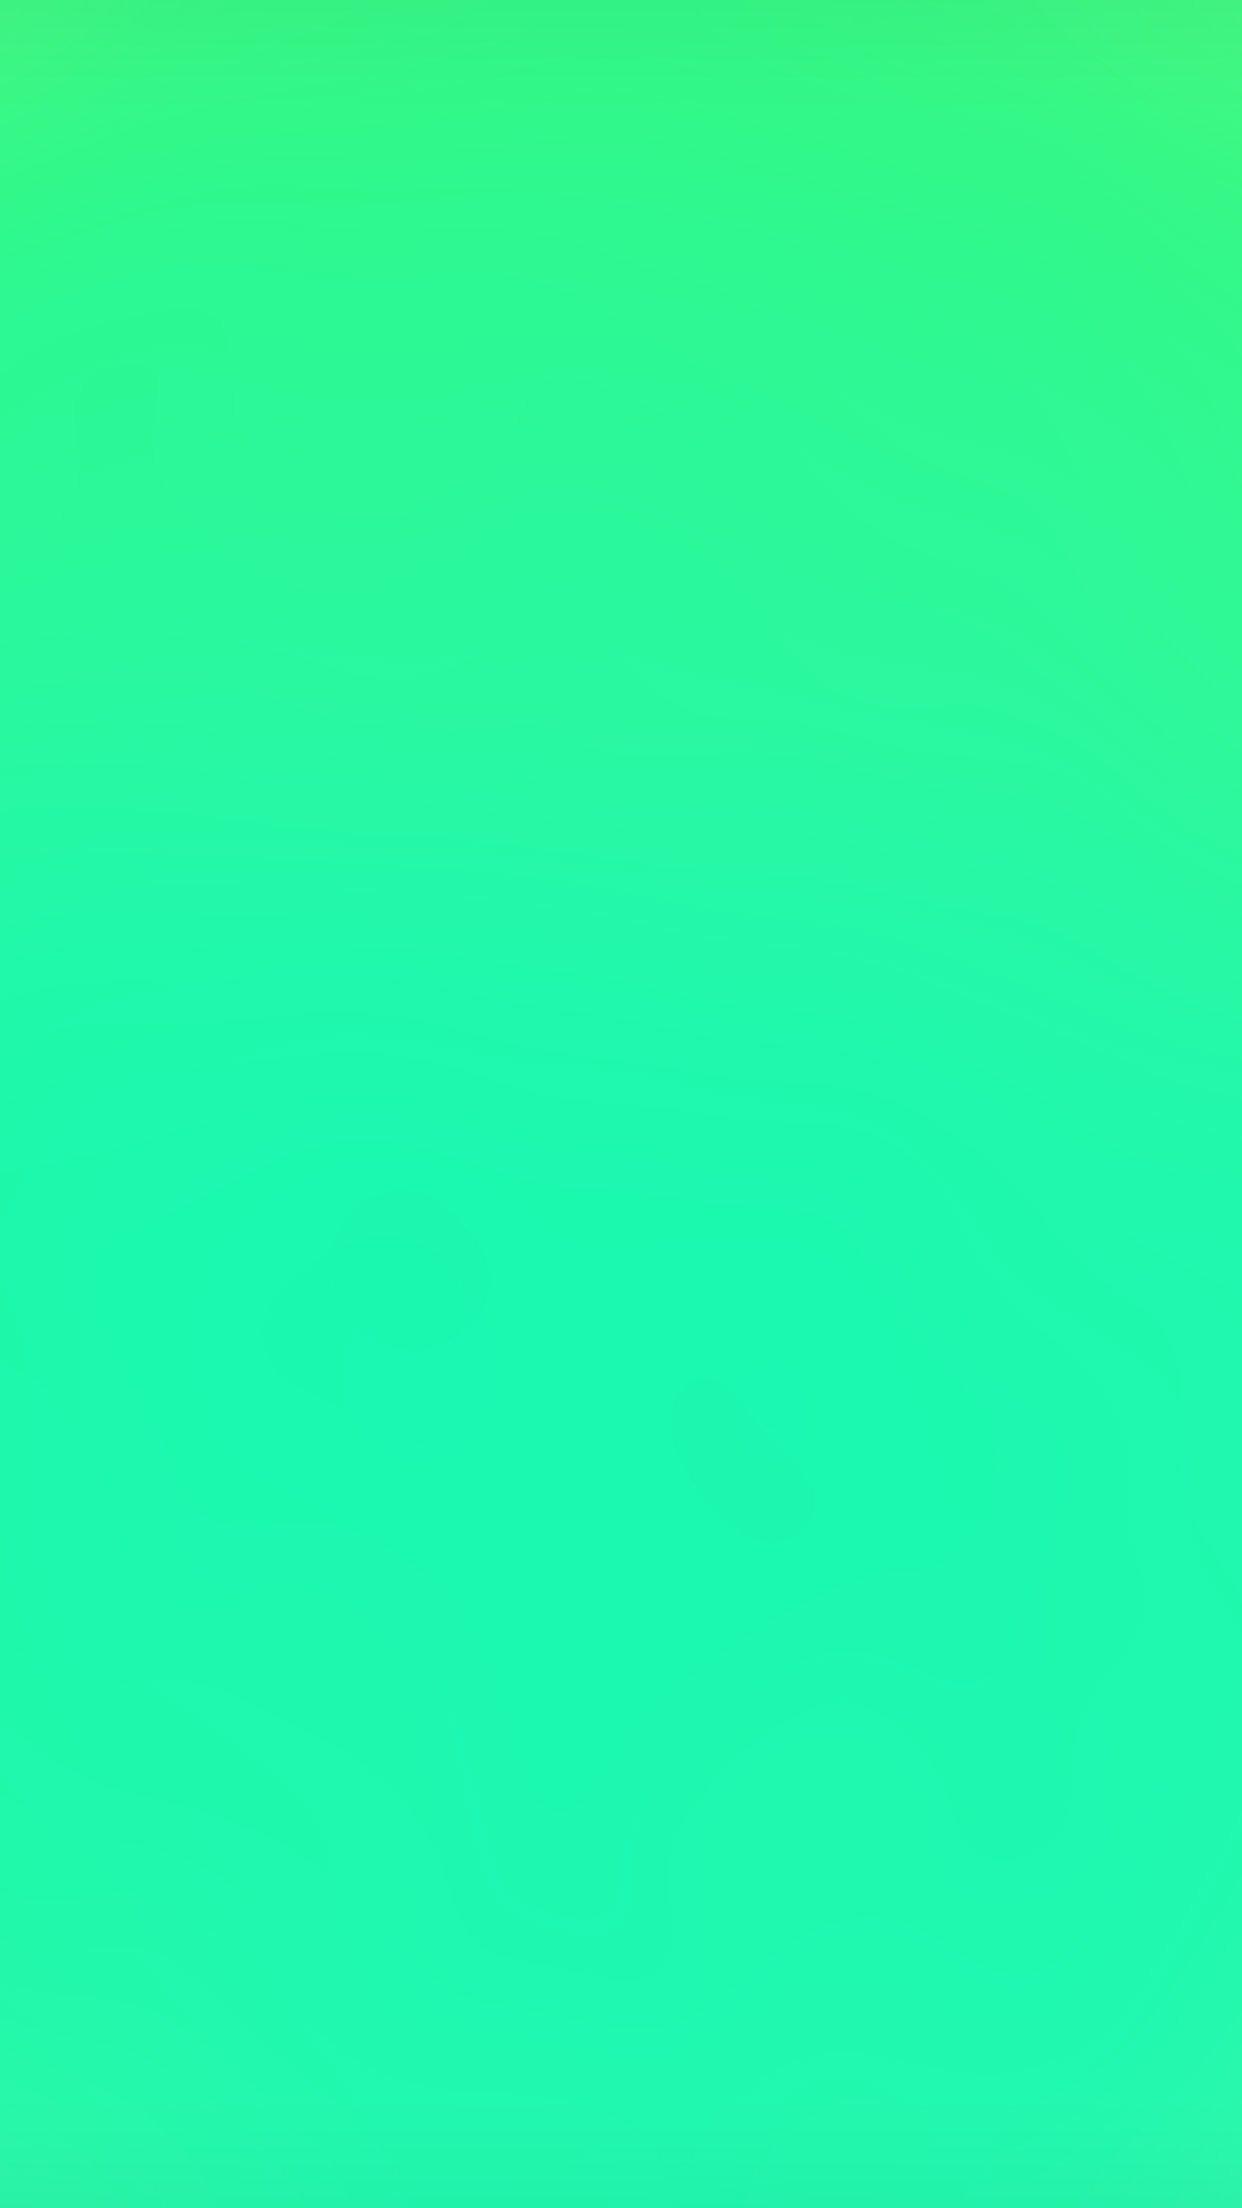 Pastel Green Iphone Wallpapers Top Free Pastel Green Iphone Backgrounds Wallpaperaccess